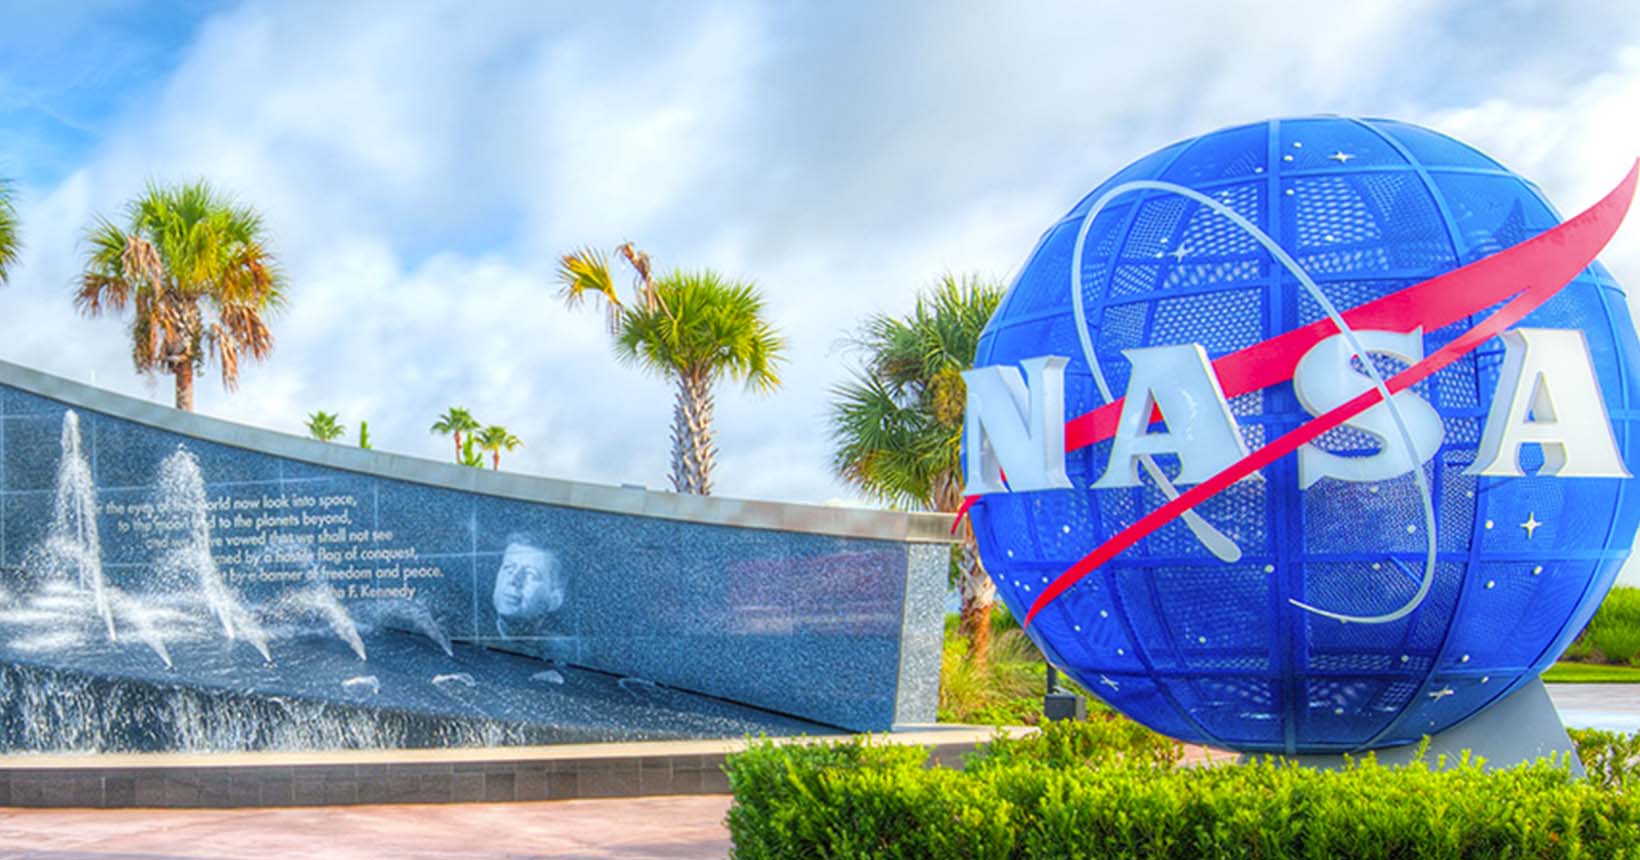 Kennedy Space Center - The NASA Park